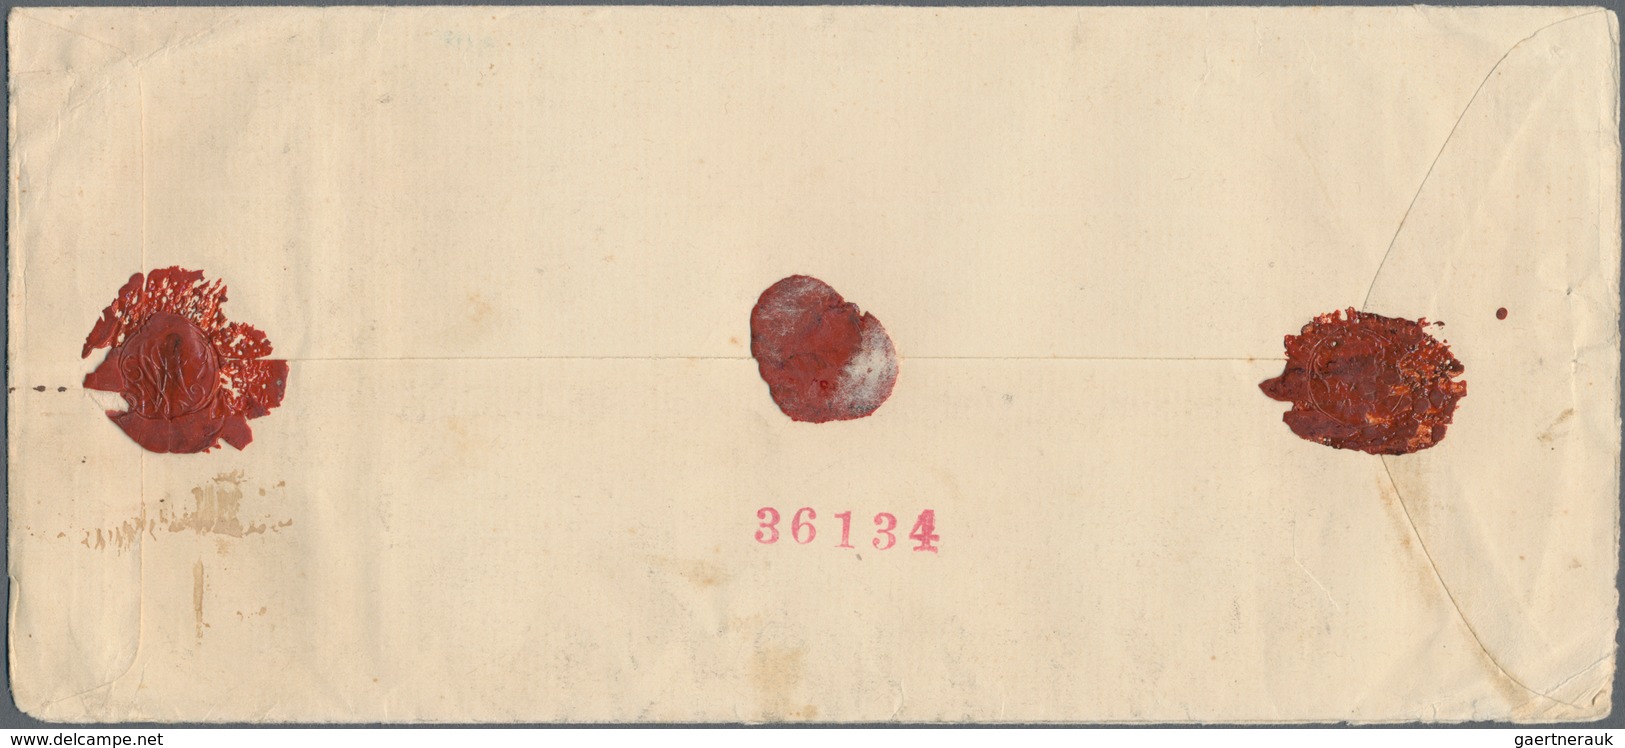 Mandschuko (Manchuko): 1941. Registered Envelope Addressed To German Government In Poland Bearing Ma - 1932-45 Manchuria (Manchukuo)